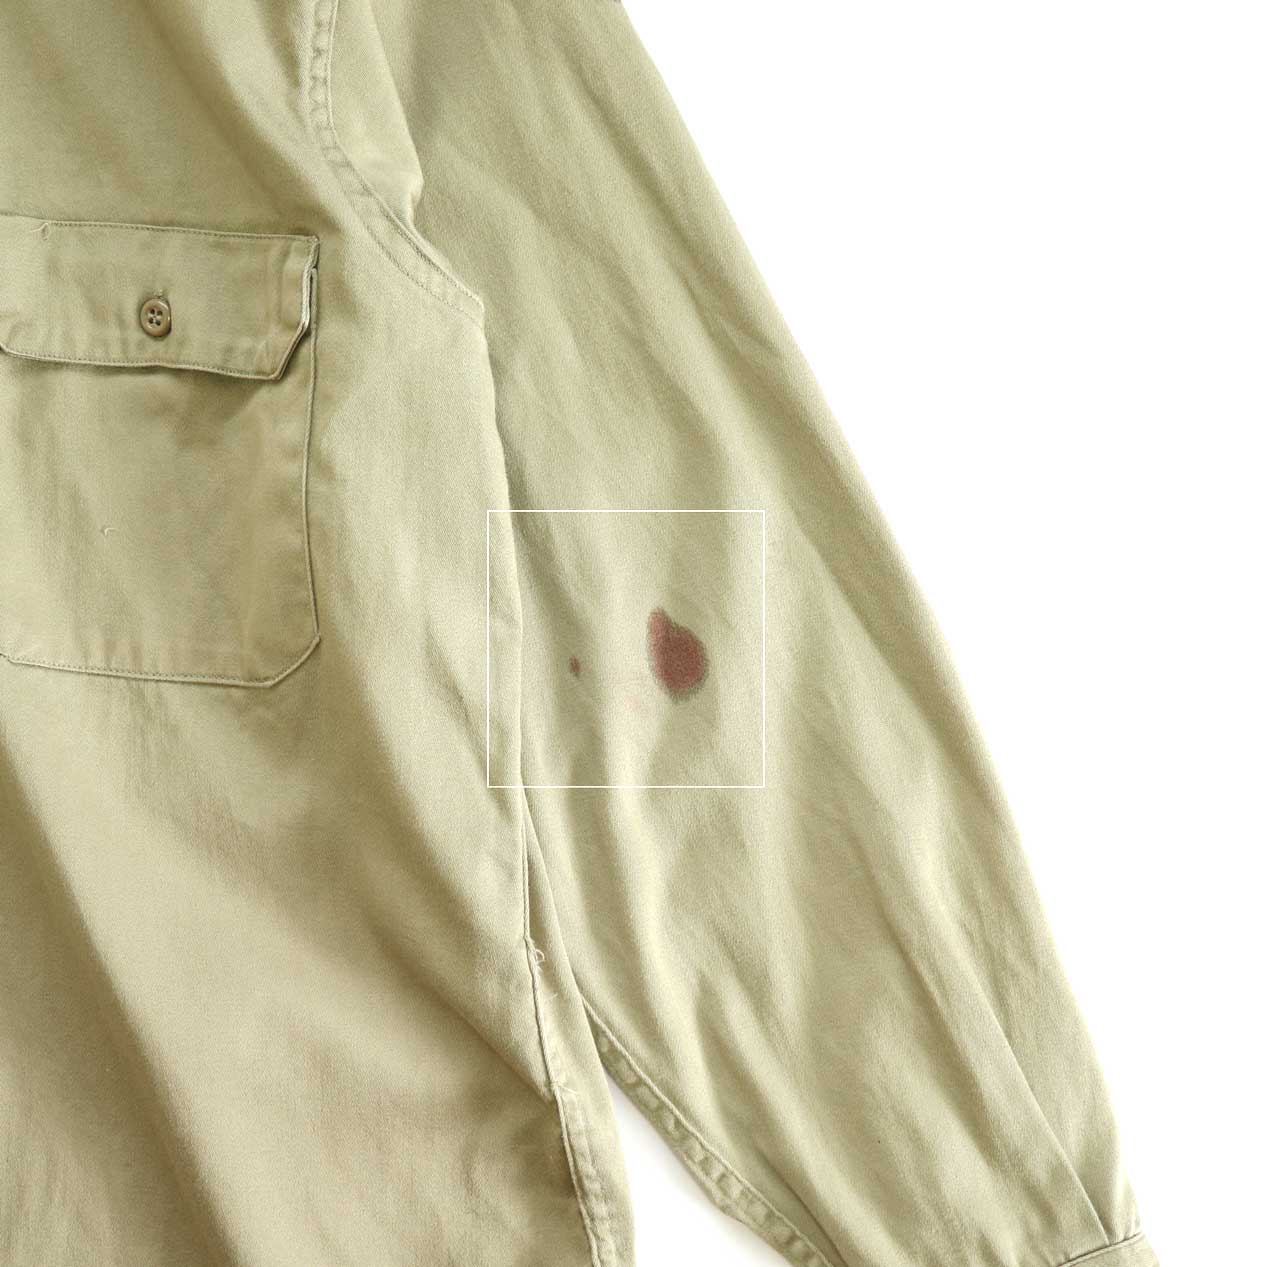 Torrent druiven Kwade trouw POST JUNK / 50-60's BIG MAC Work Shirt